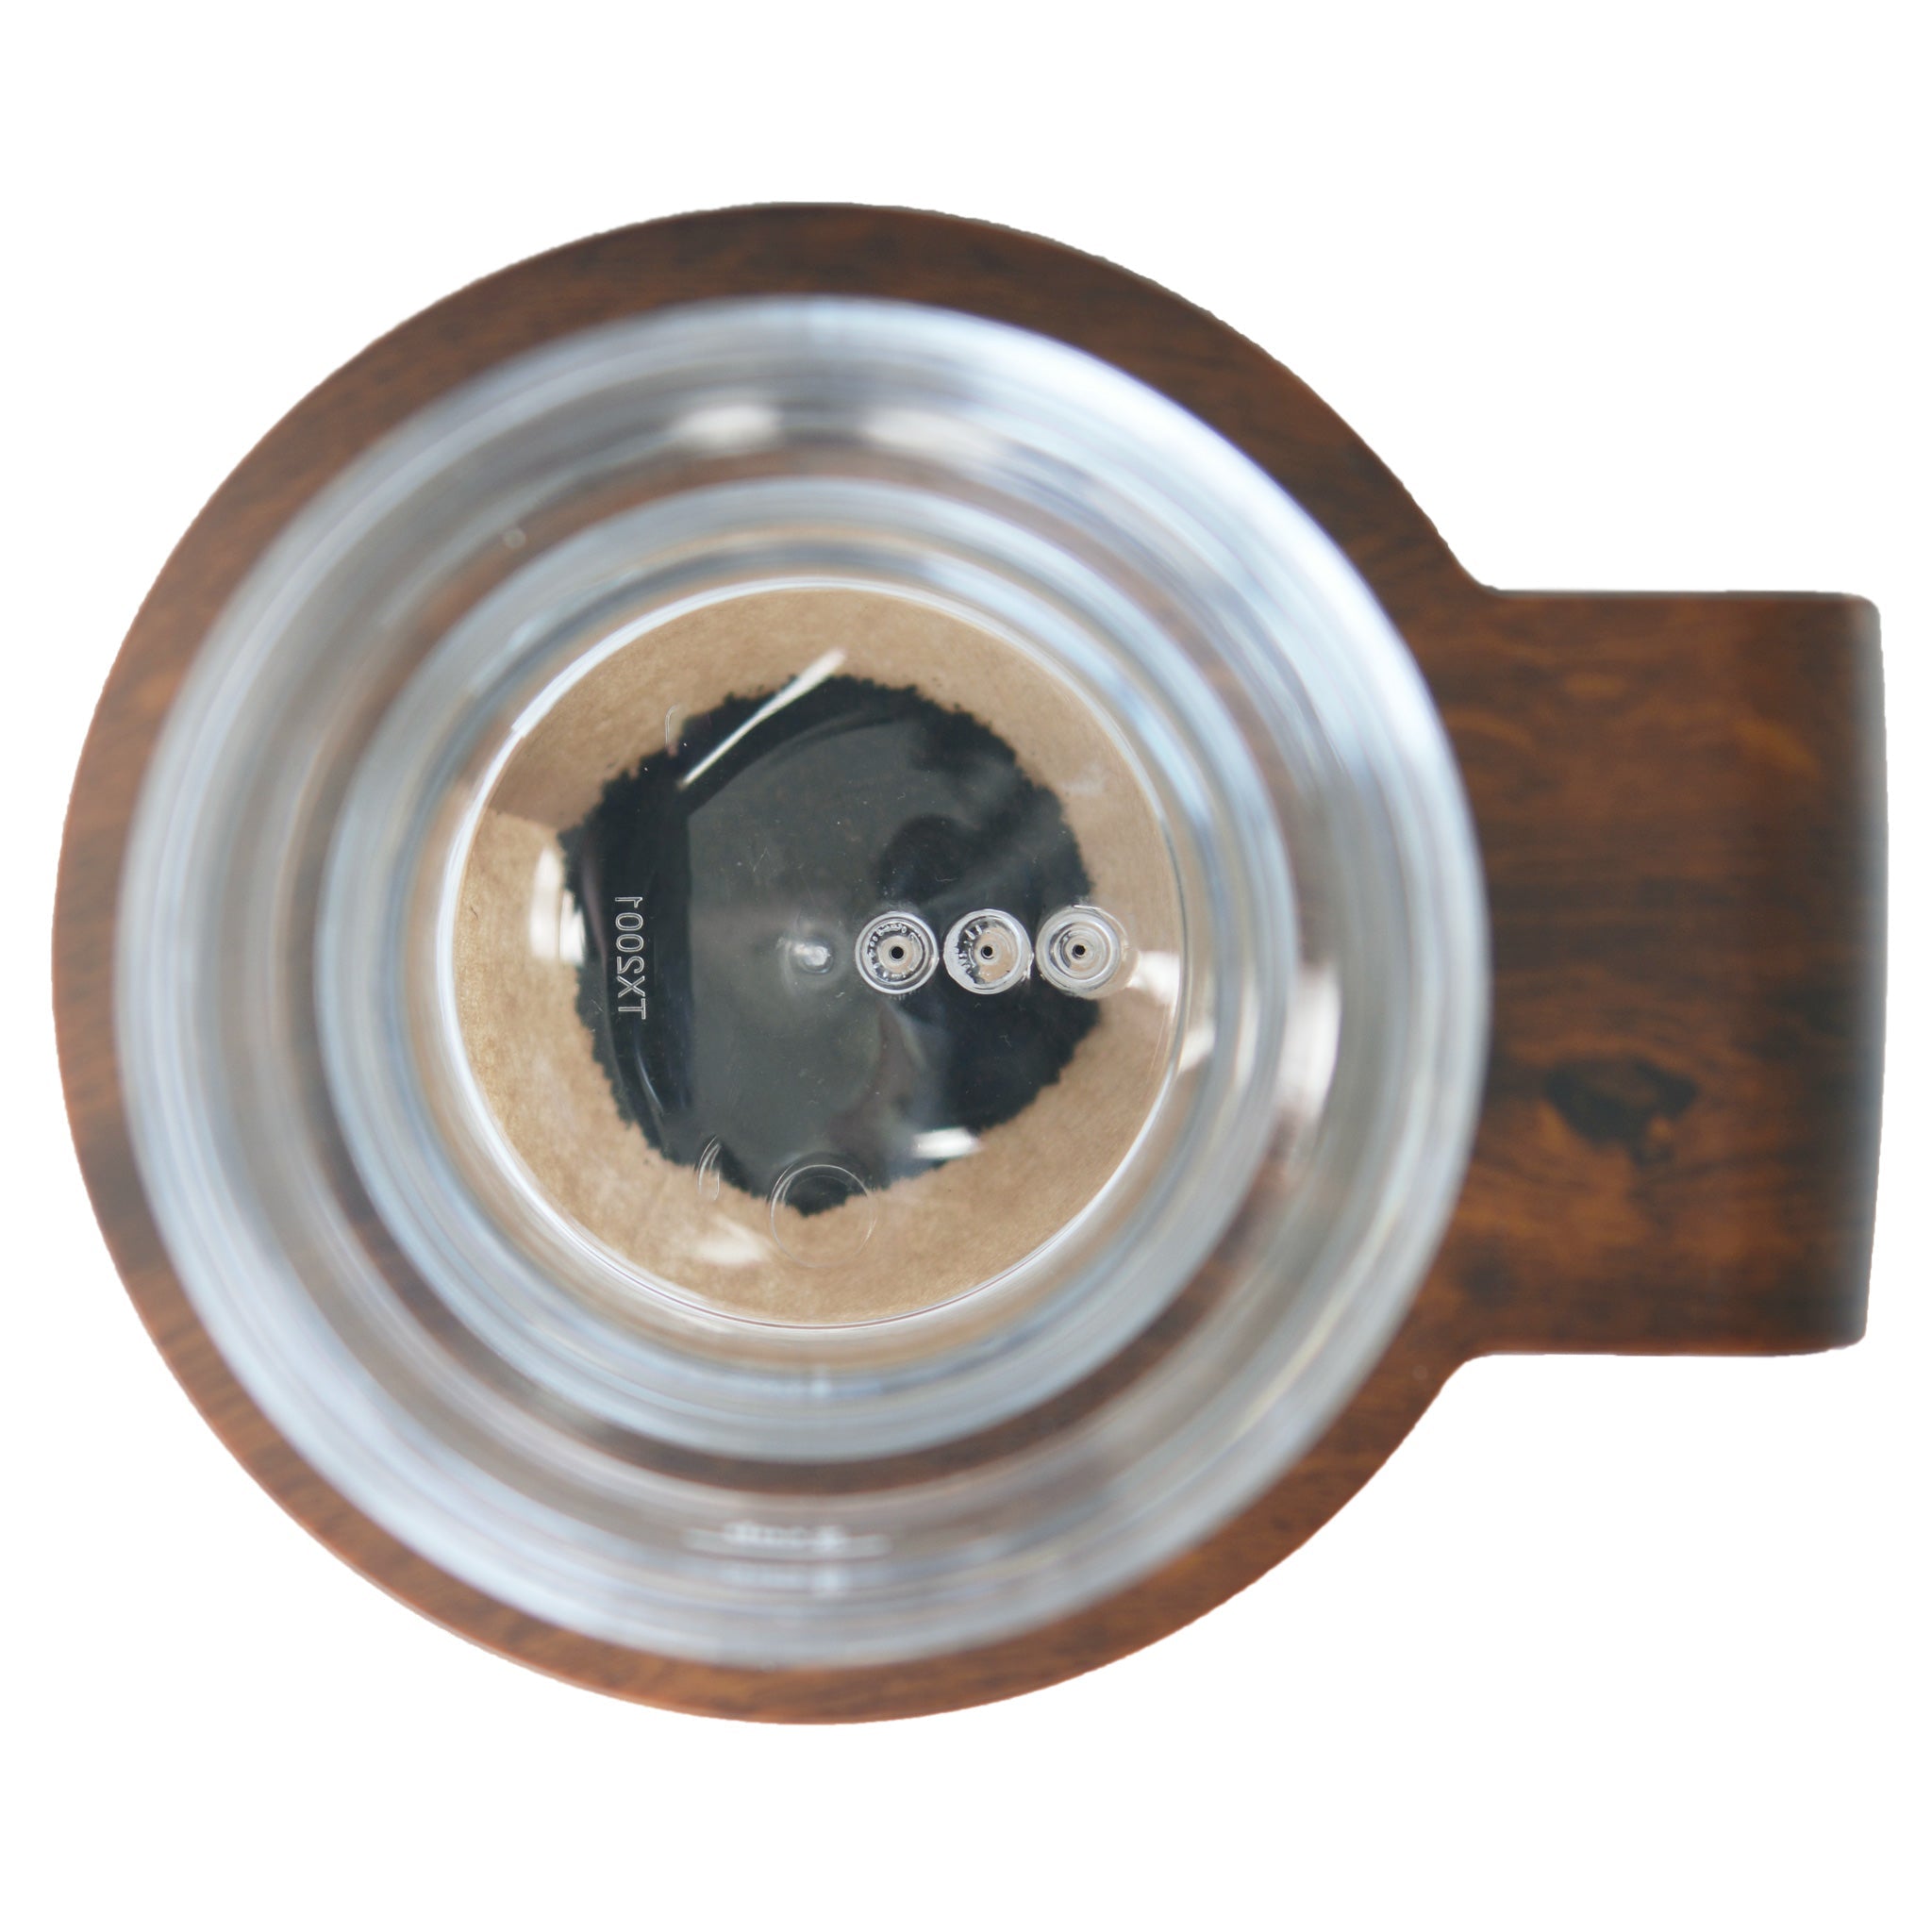 Shine Kitchen Co. Autopour Automatic Pour Over Coffee Machine - Top View